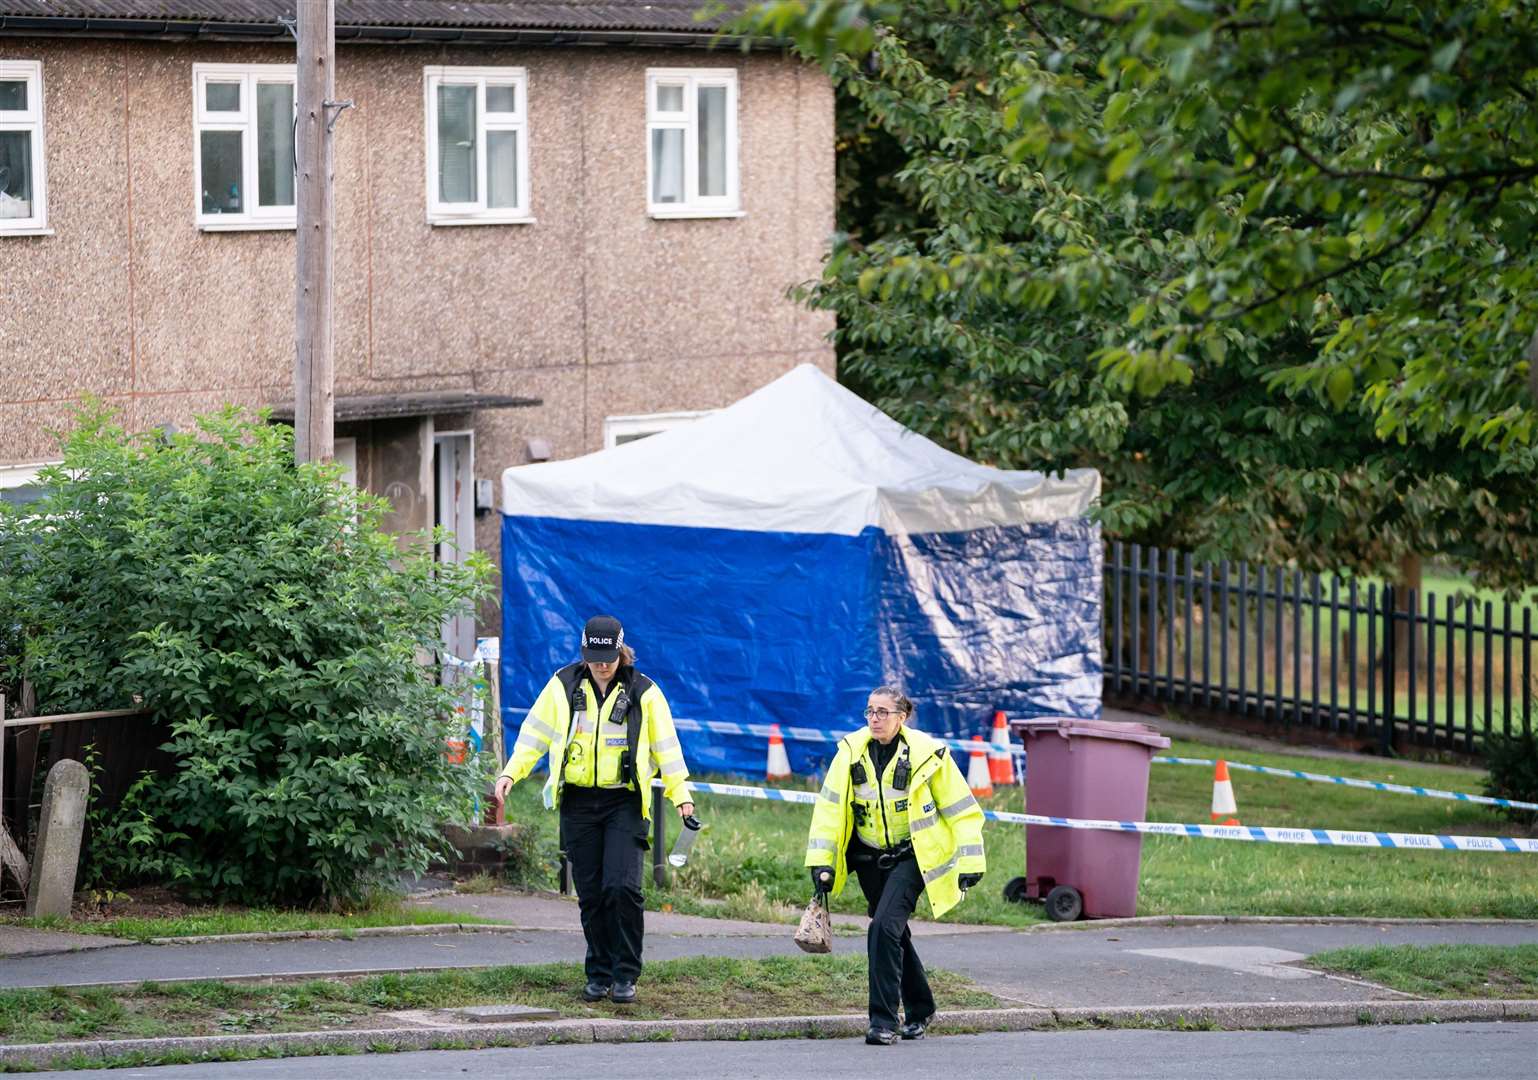 Police at the scene in Killamarsh, Derbyshire (Danny Lawson/PA)